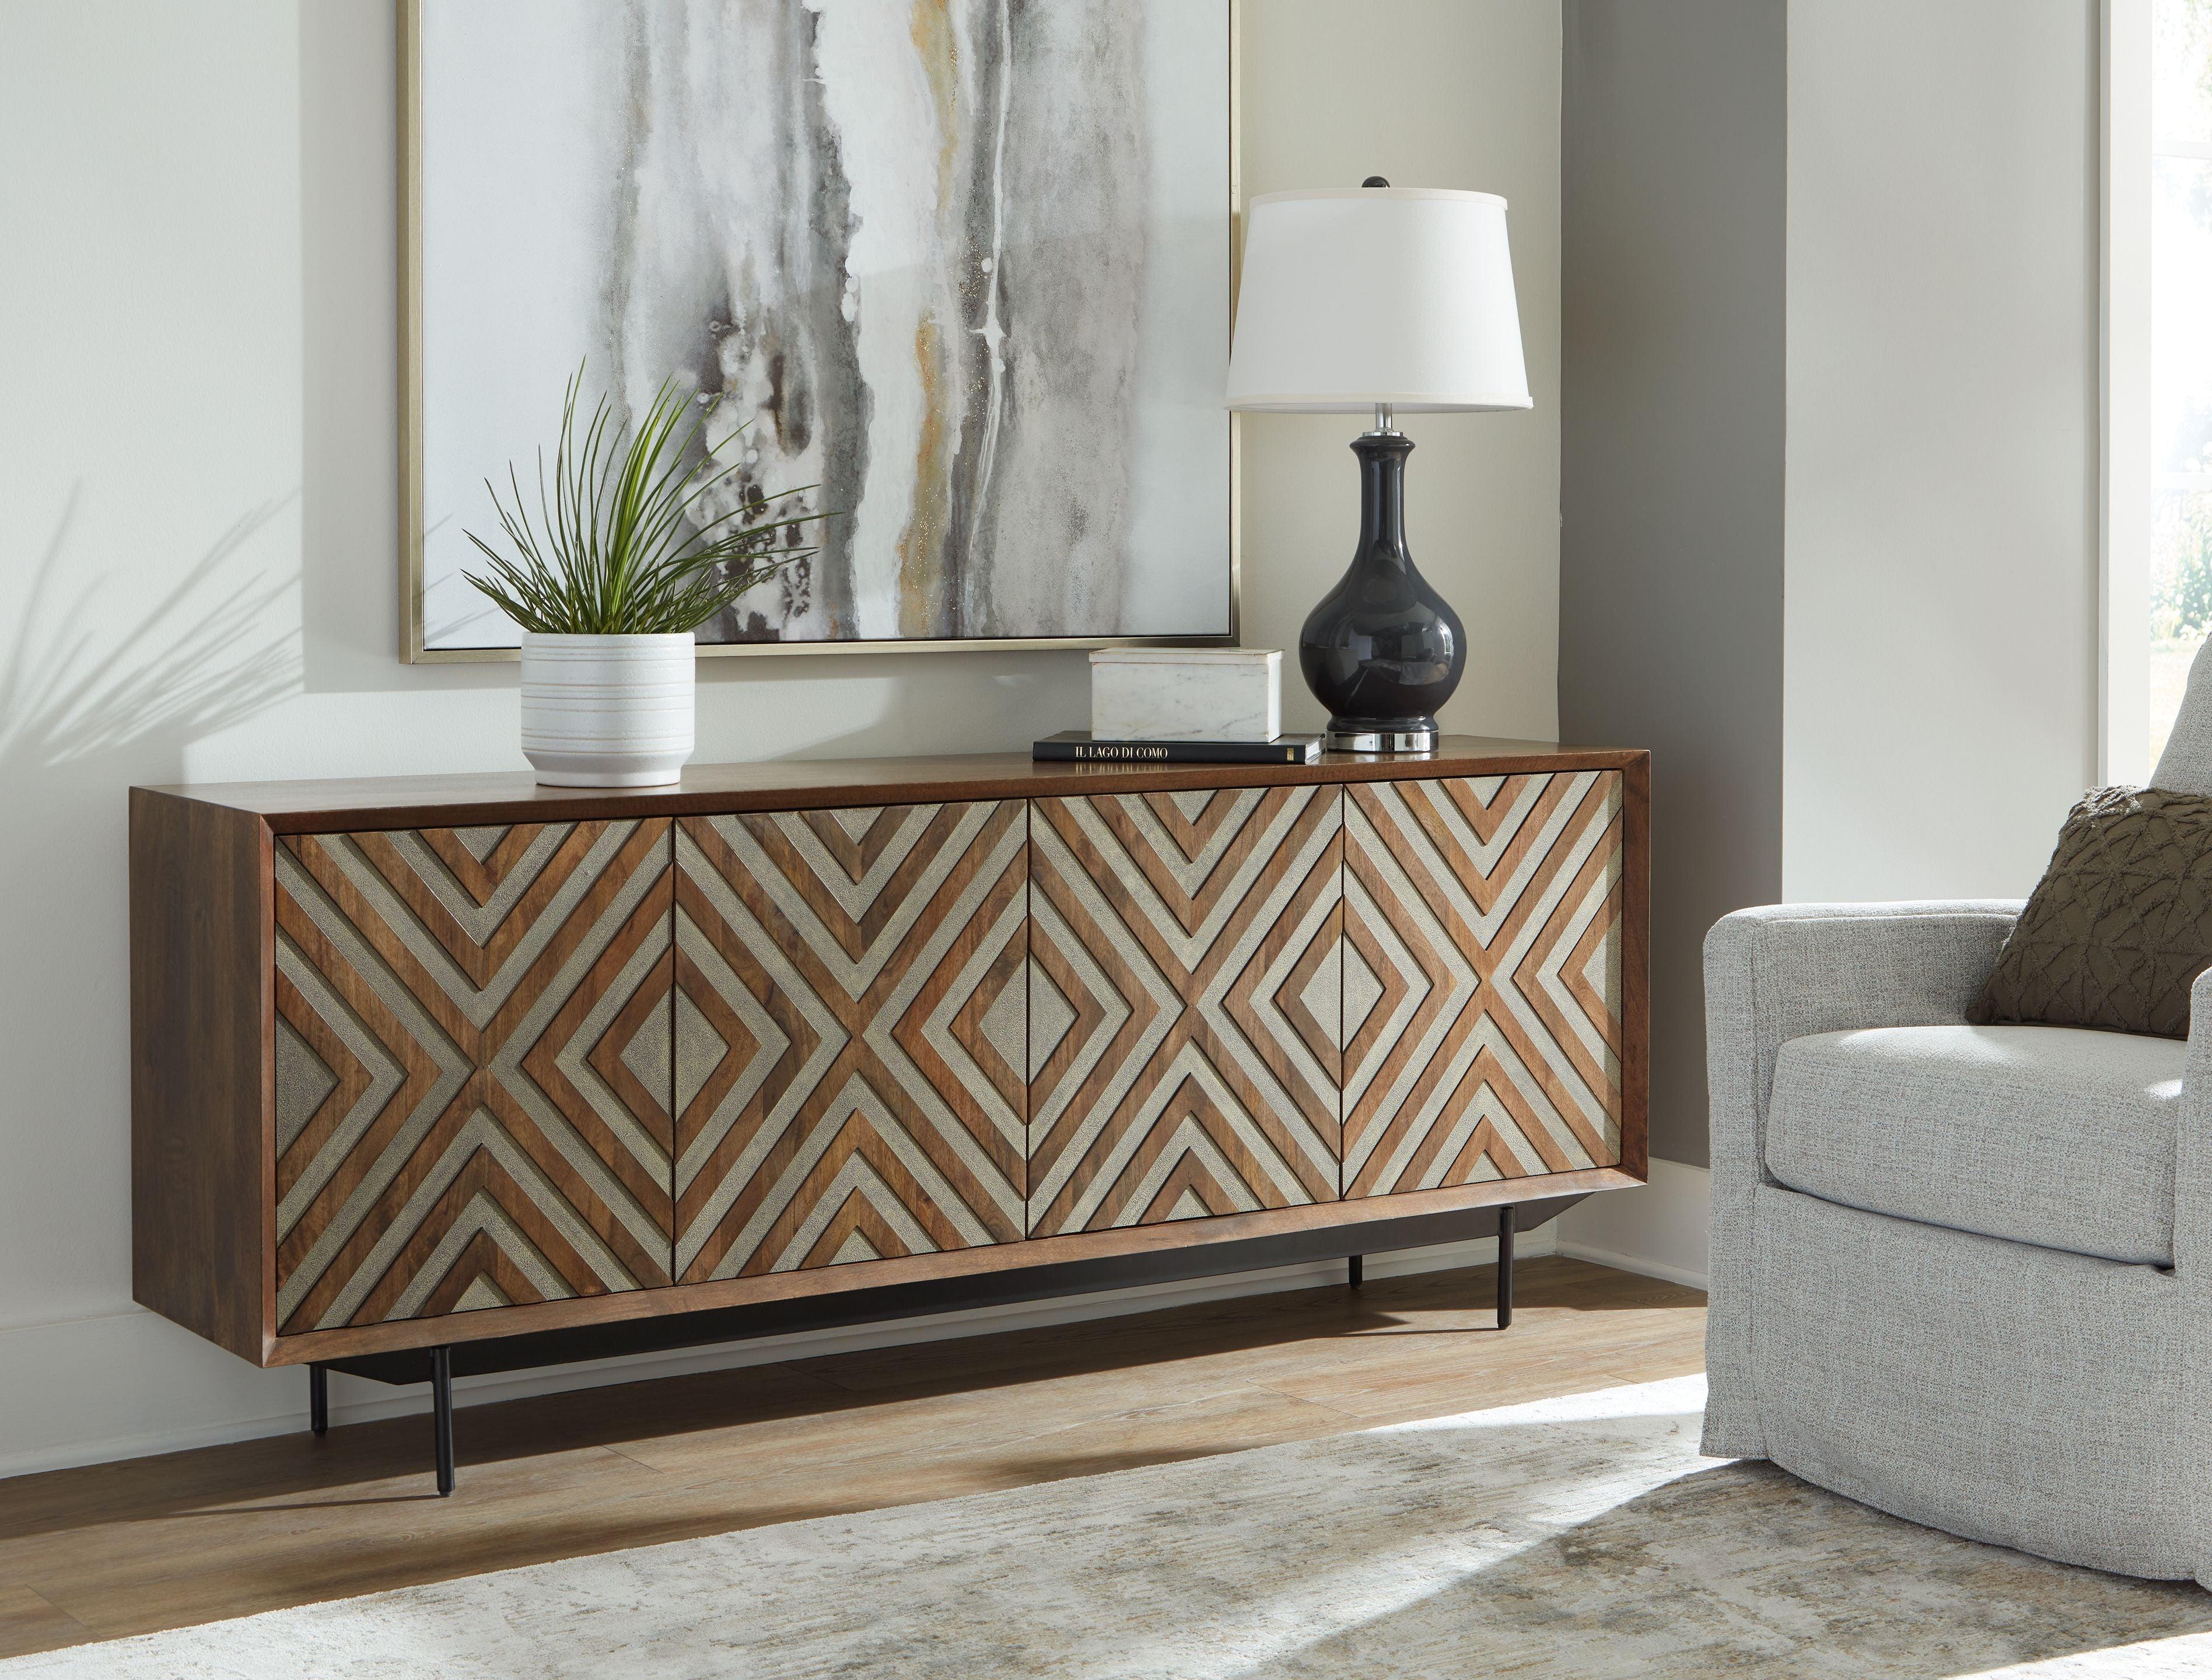 Signature Design by Ashley® - Dreggan - Brown / Gold Finish - Accent Cabinet - 5th Avenue Furniture